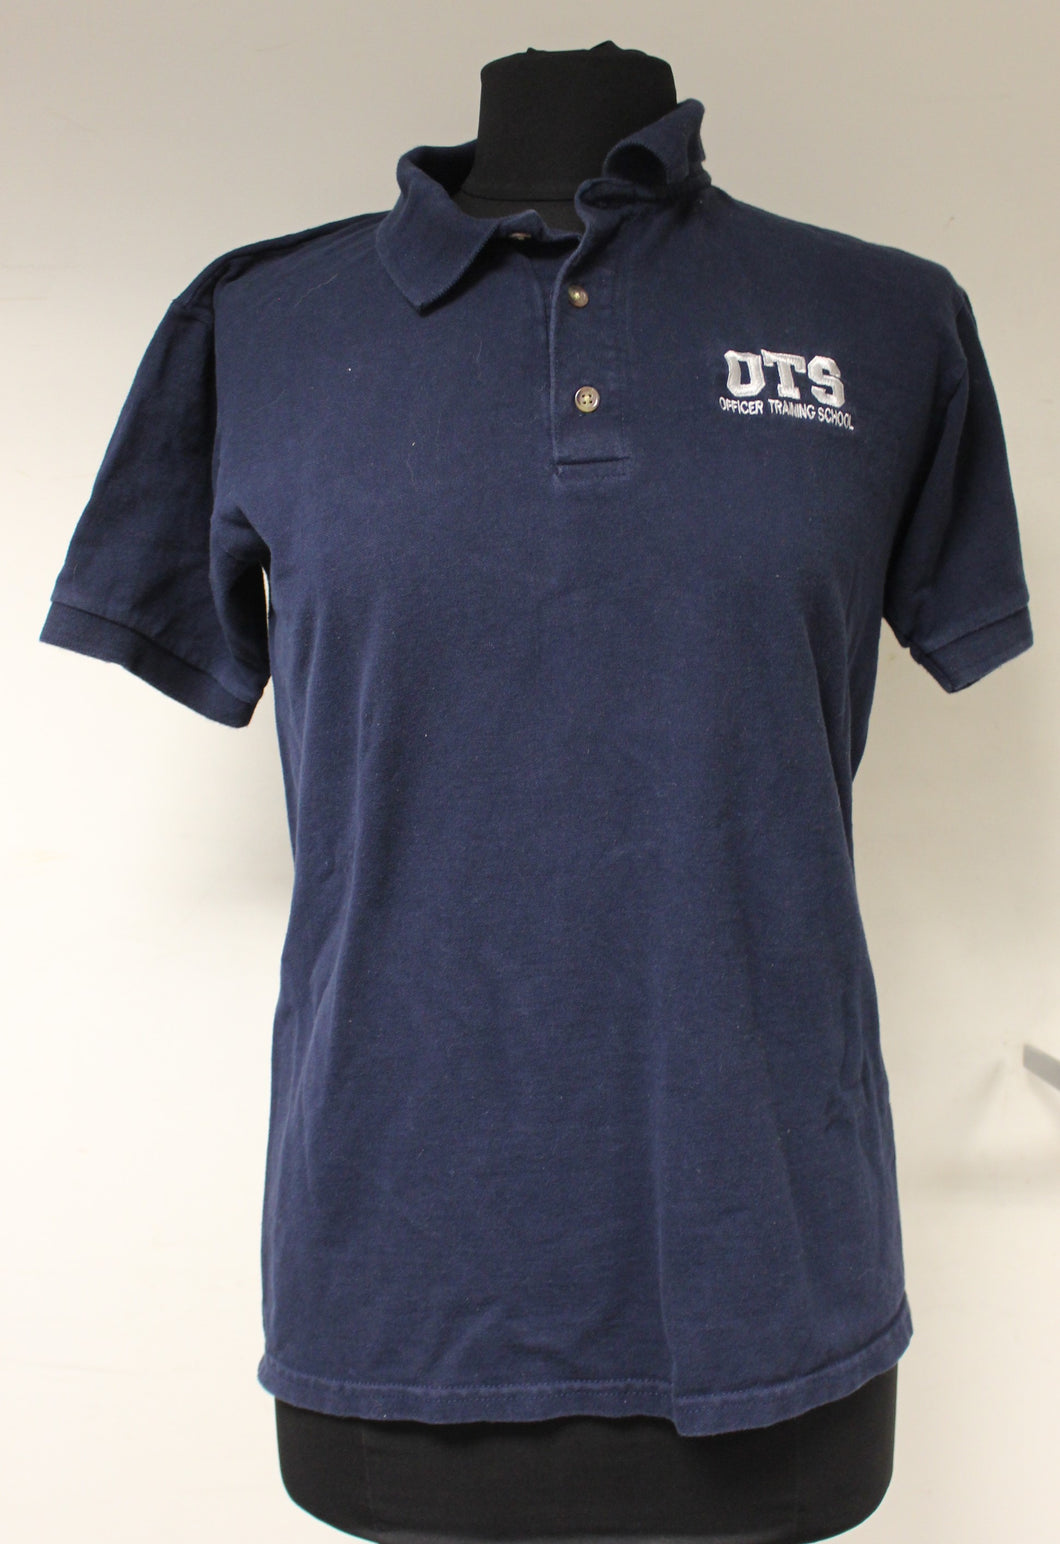 OTS Officer Training School Short Sleeve Polo Shirt - HOYAS - Navy Blue - Small